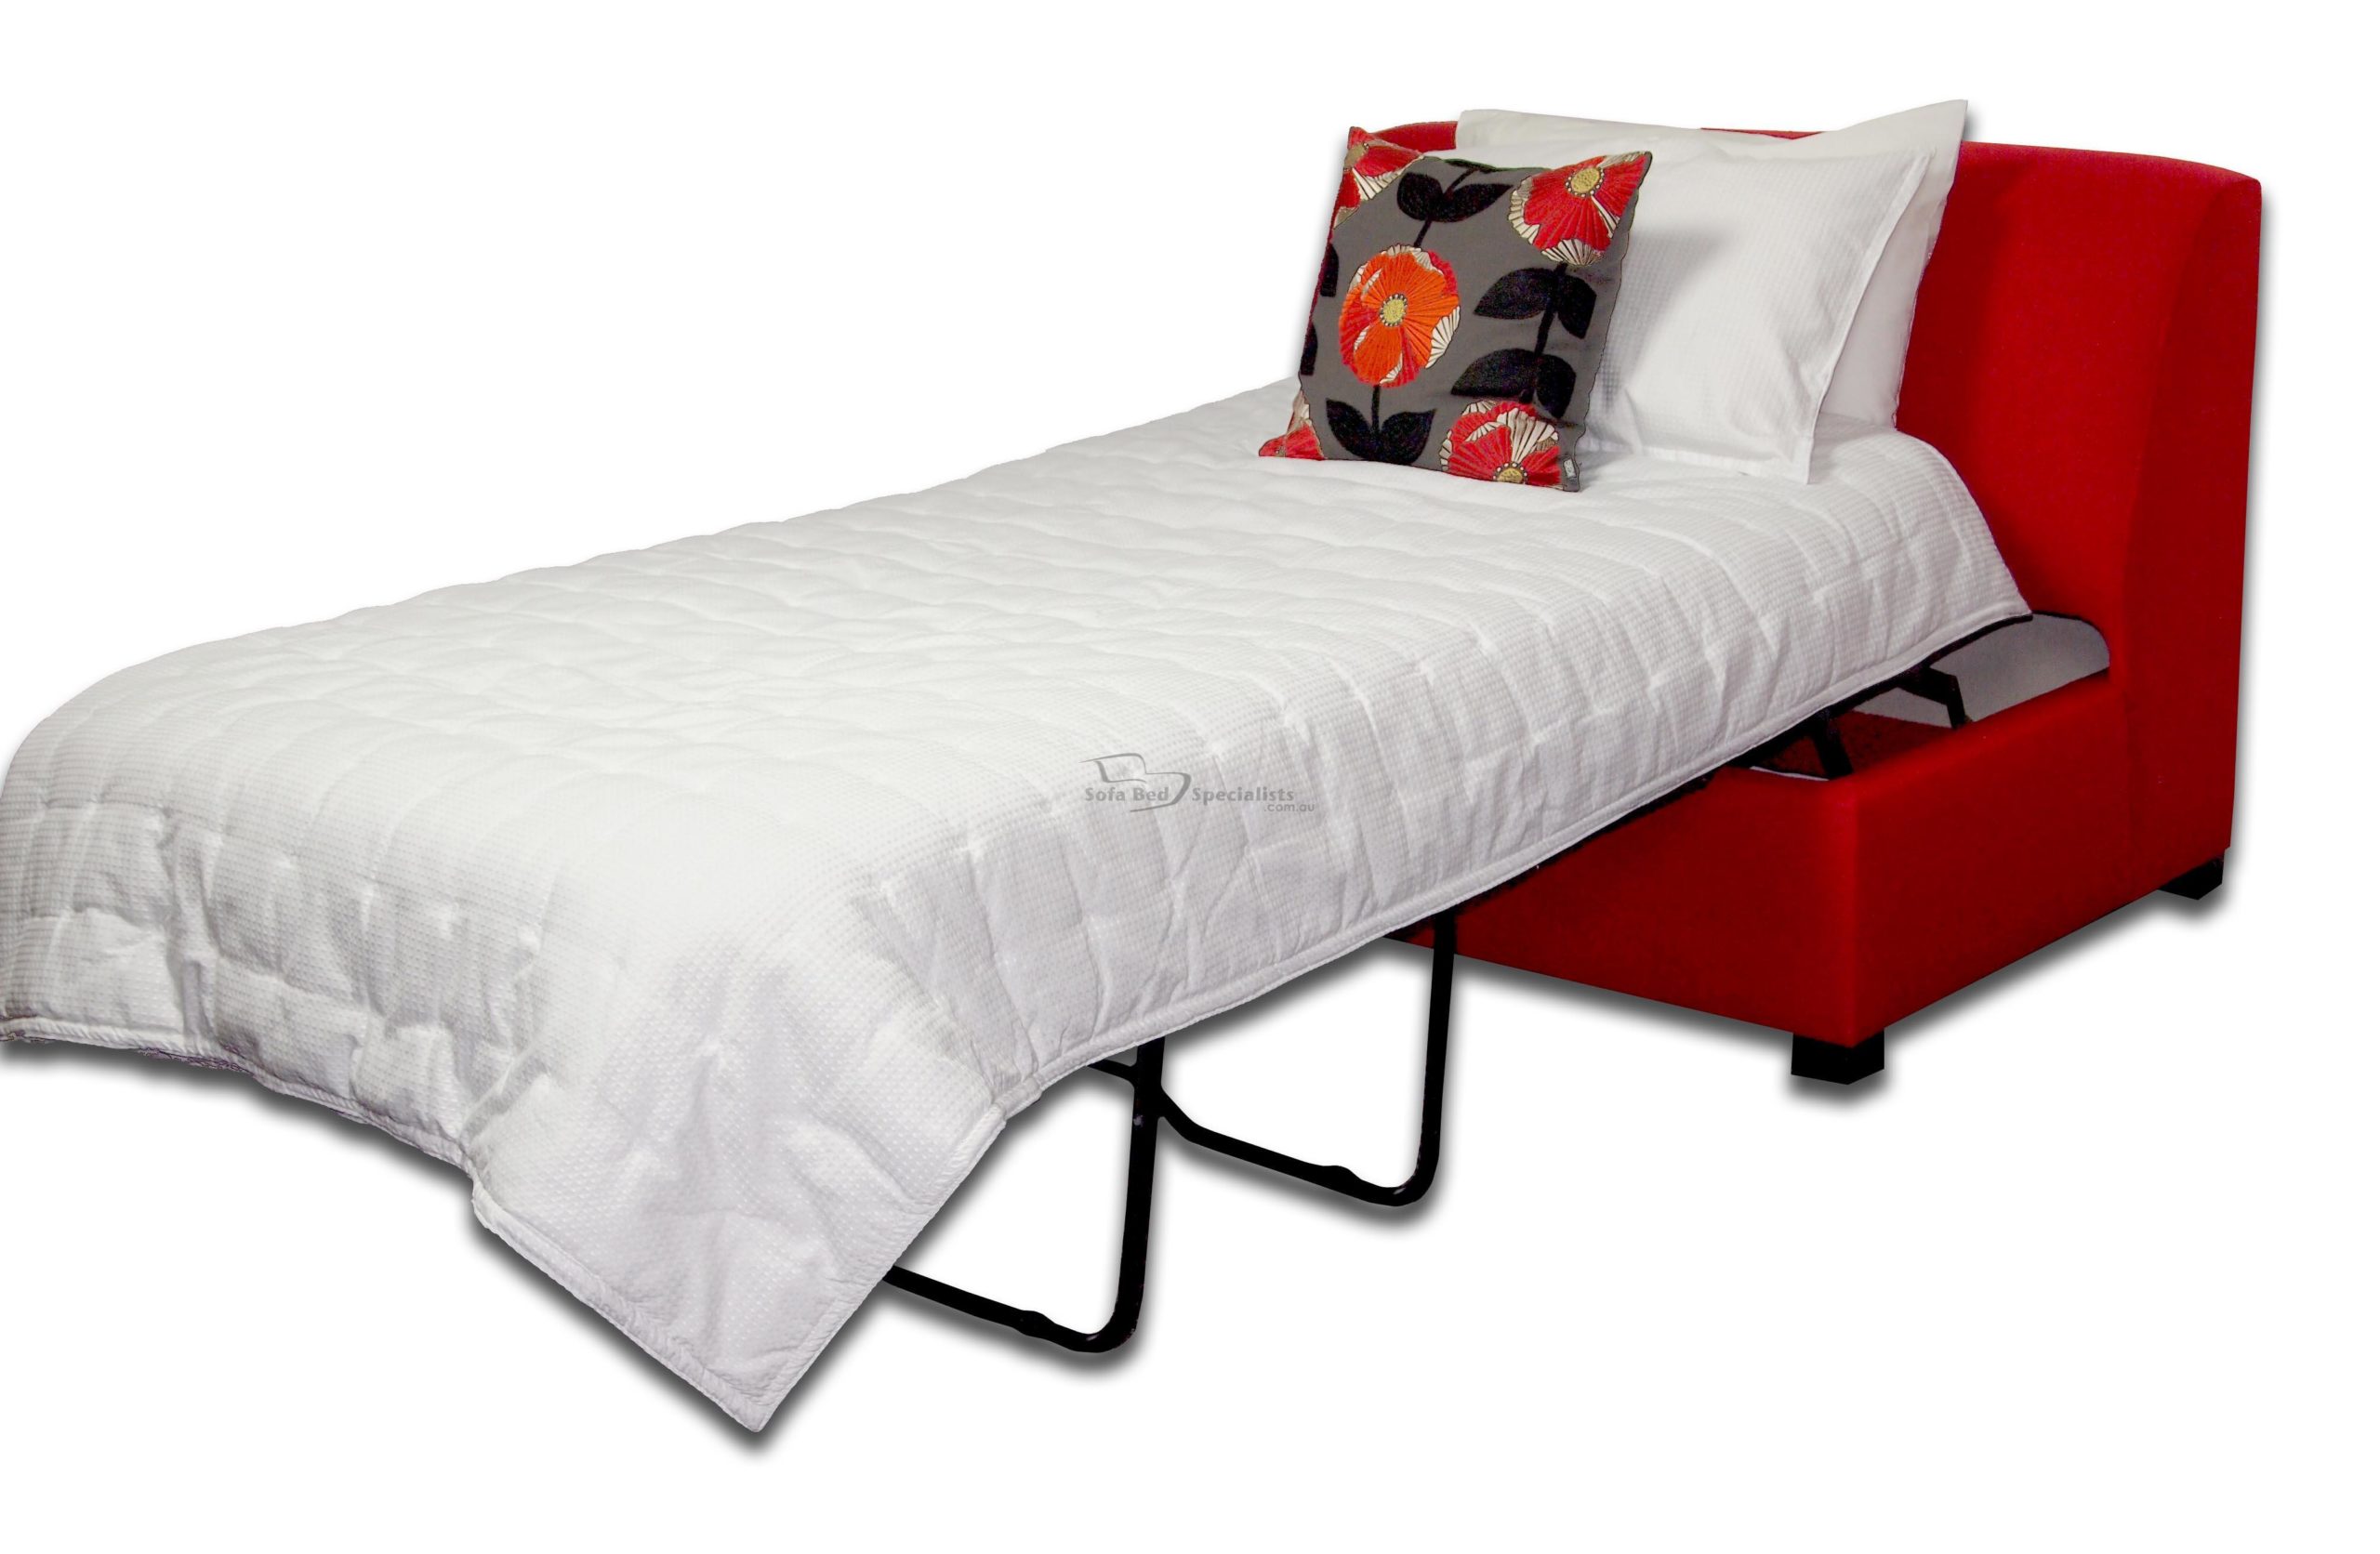 armless sofa beds australia